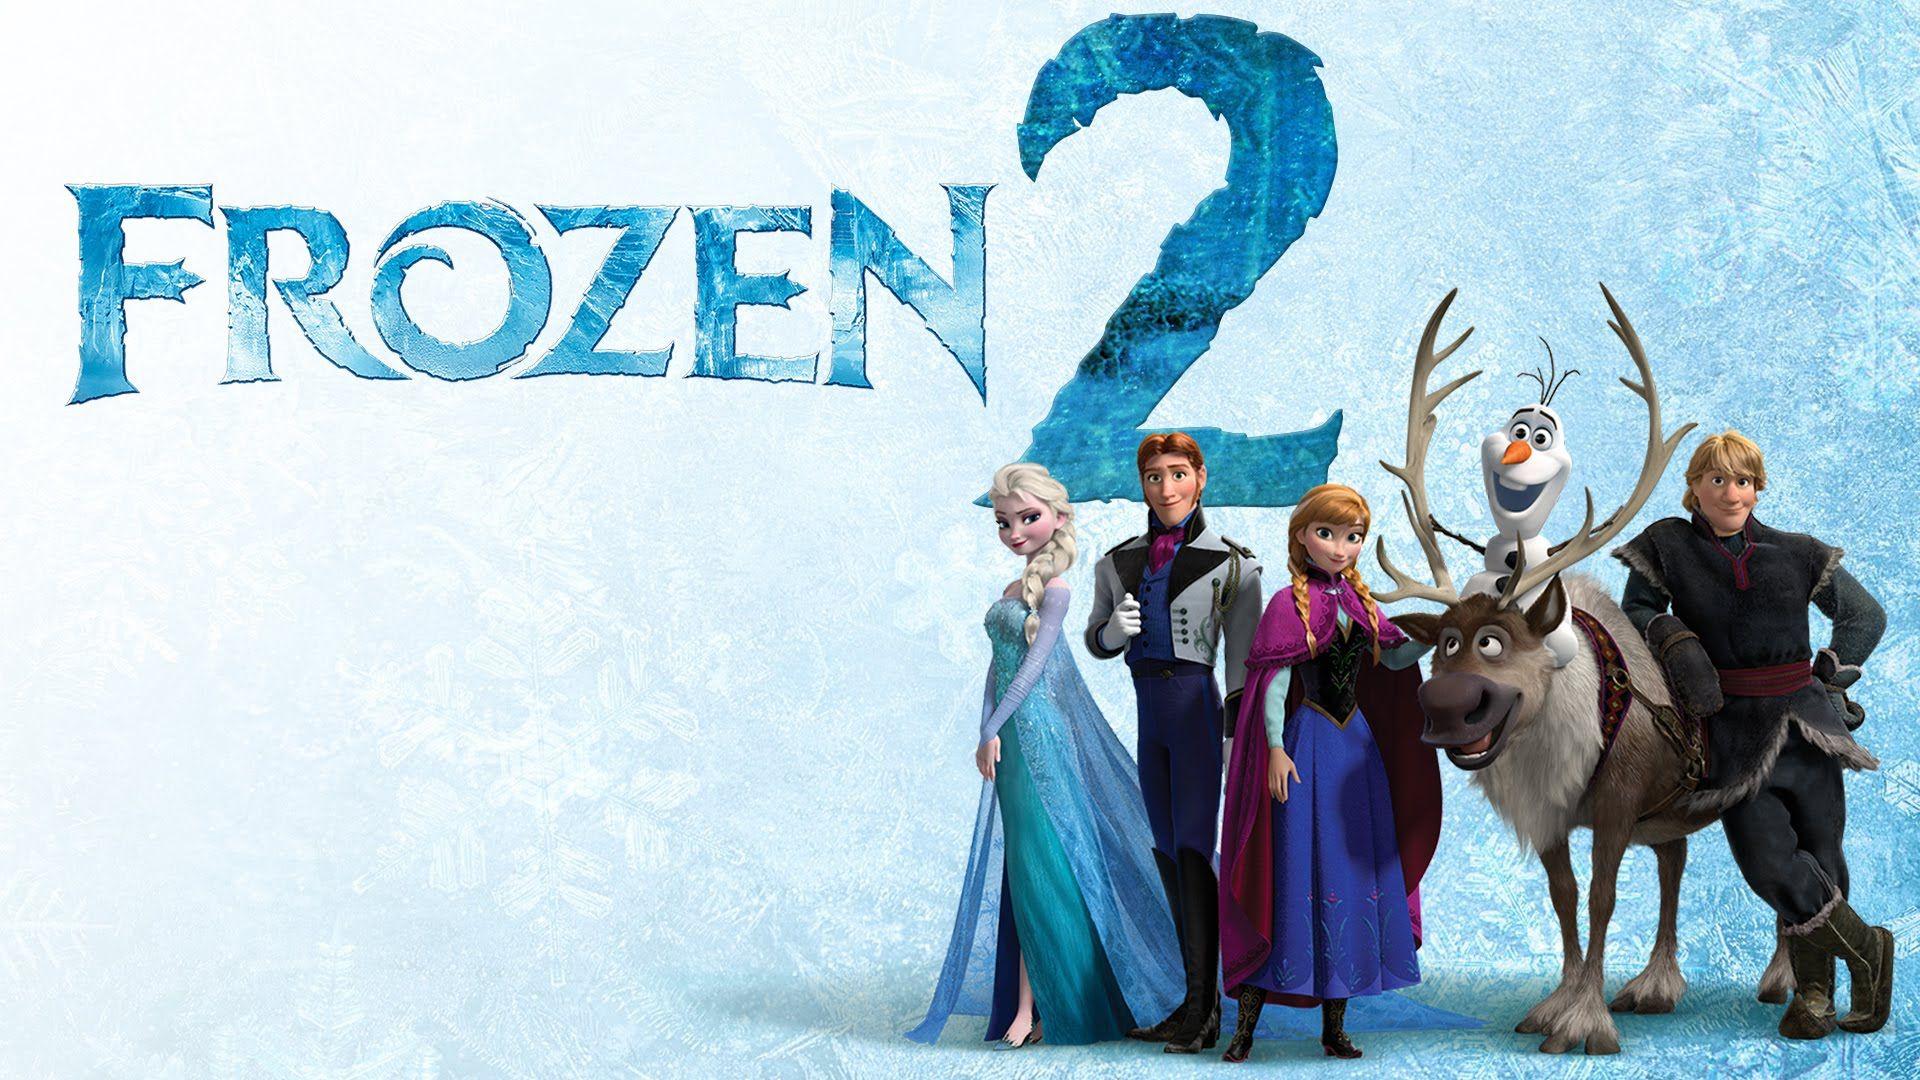 Frozen Lion King Live Action, Indiana Jones Get Release Dates